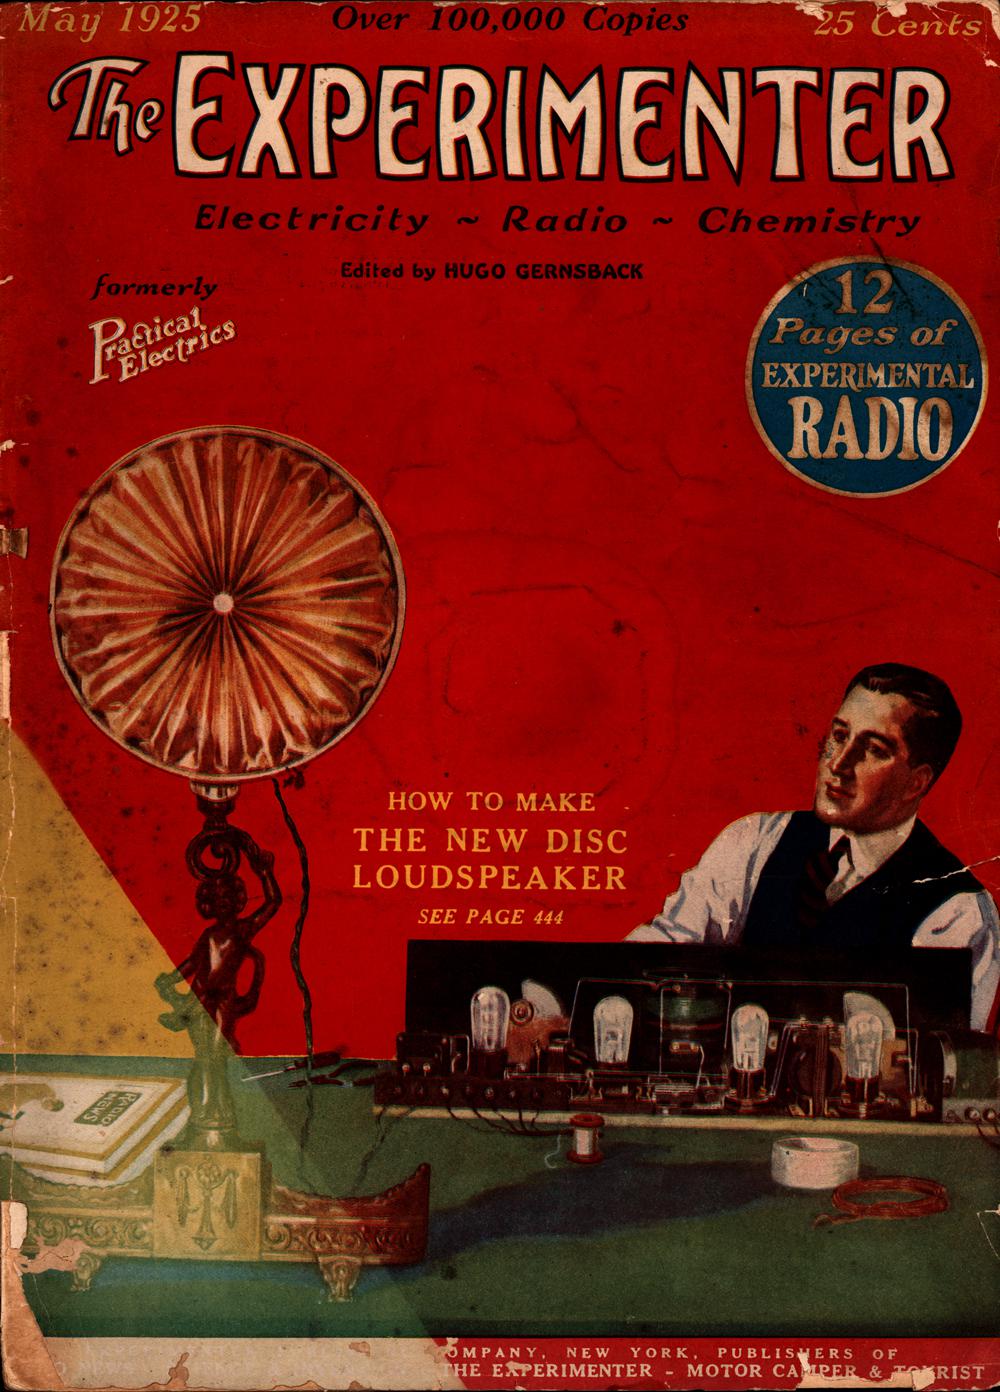 1925 - The experimenter. electricity, radio, chemistry - Vol. 4, No. 7